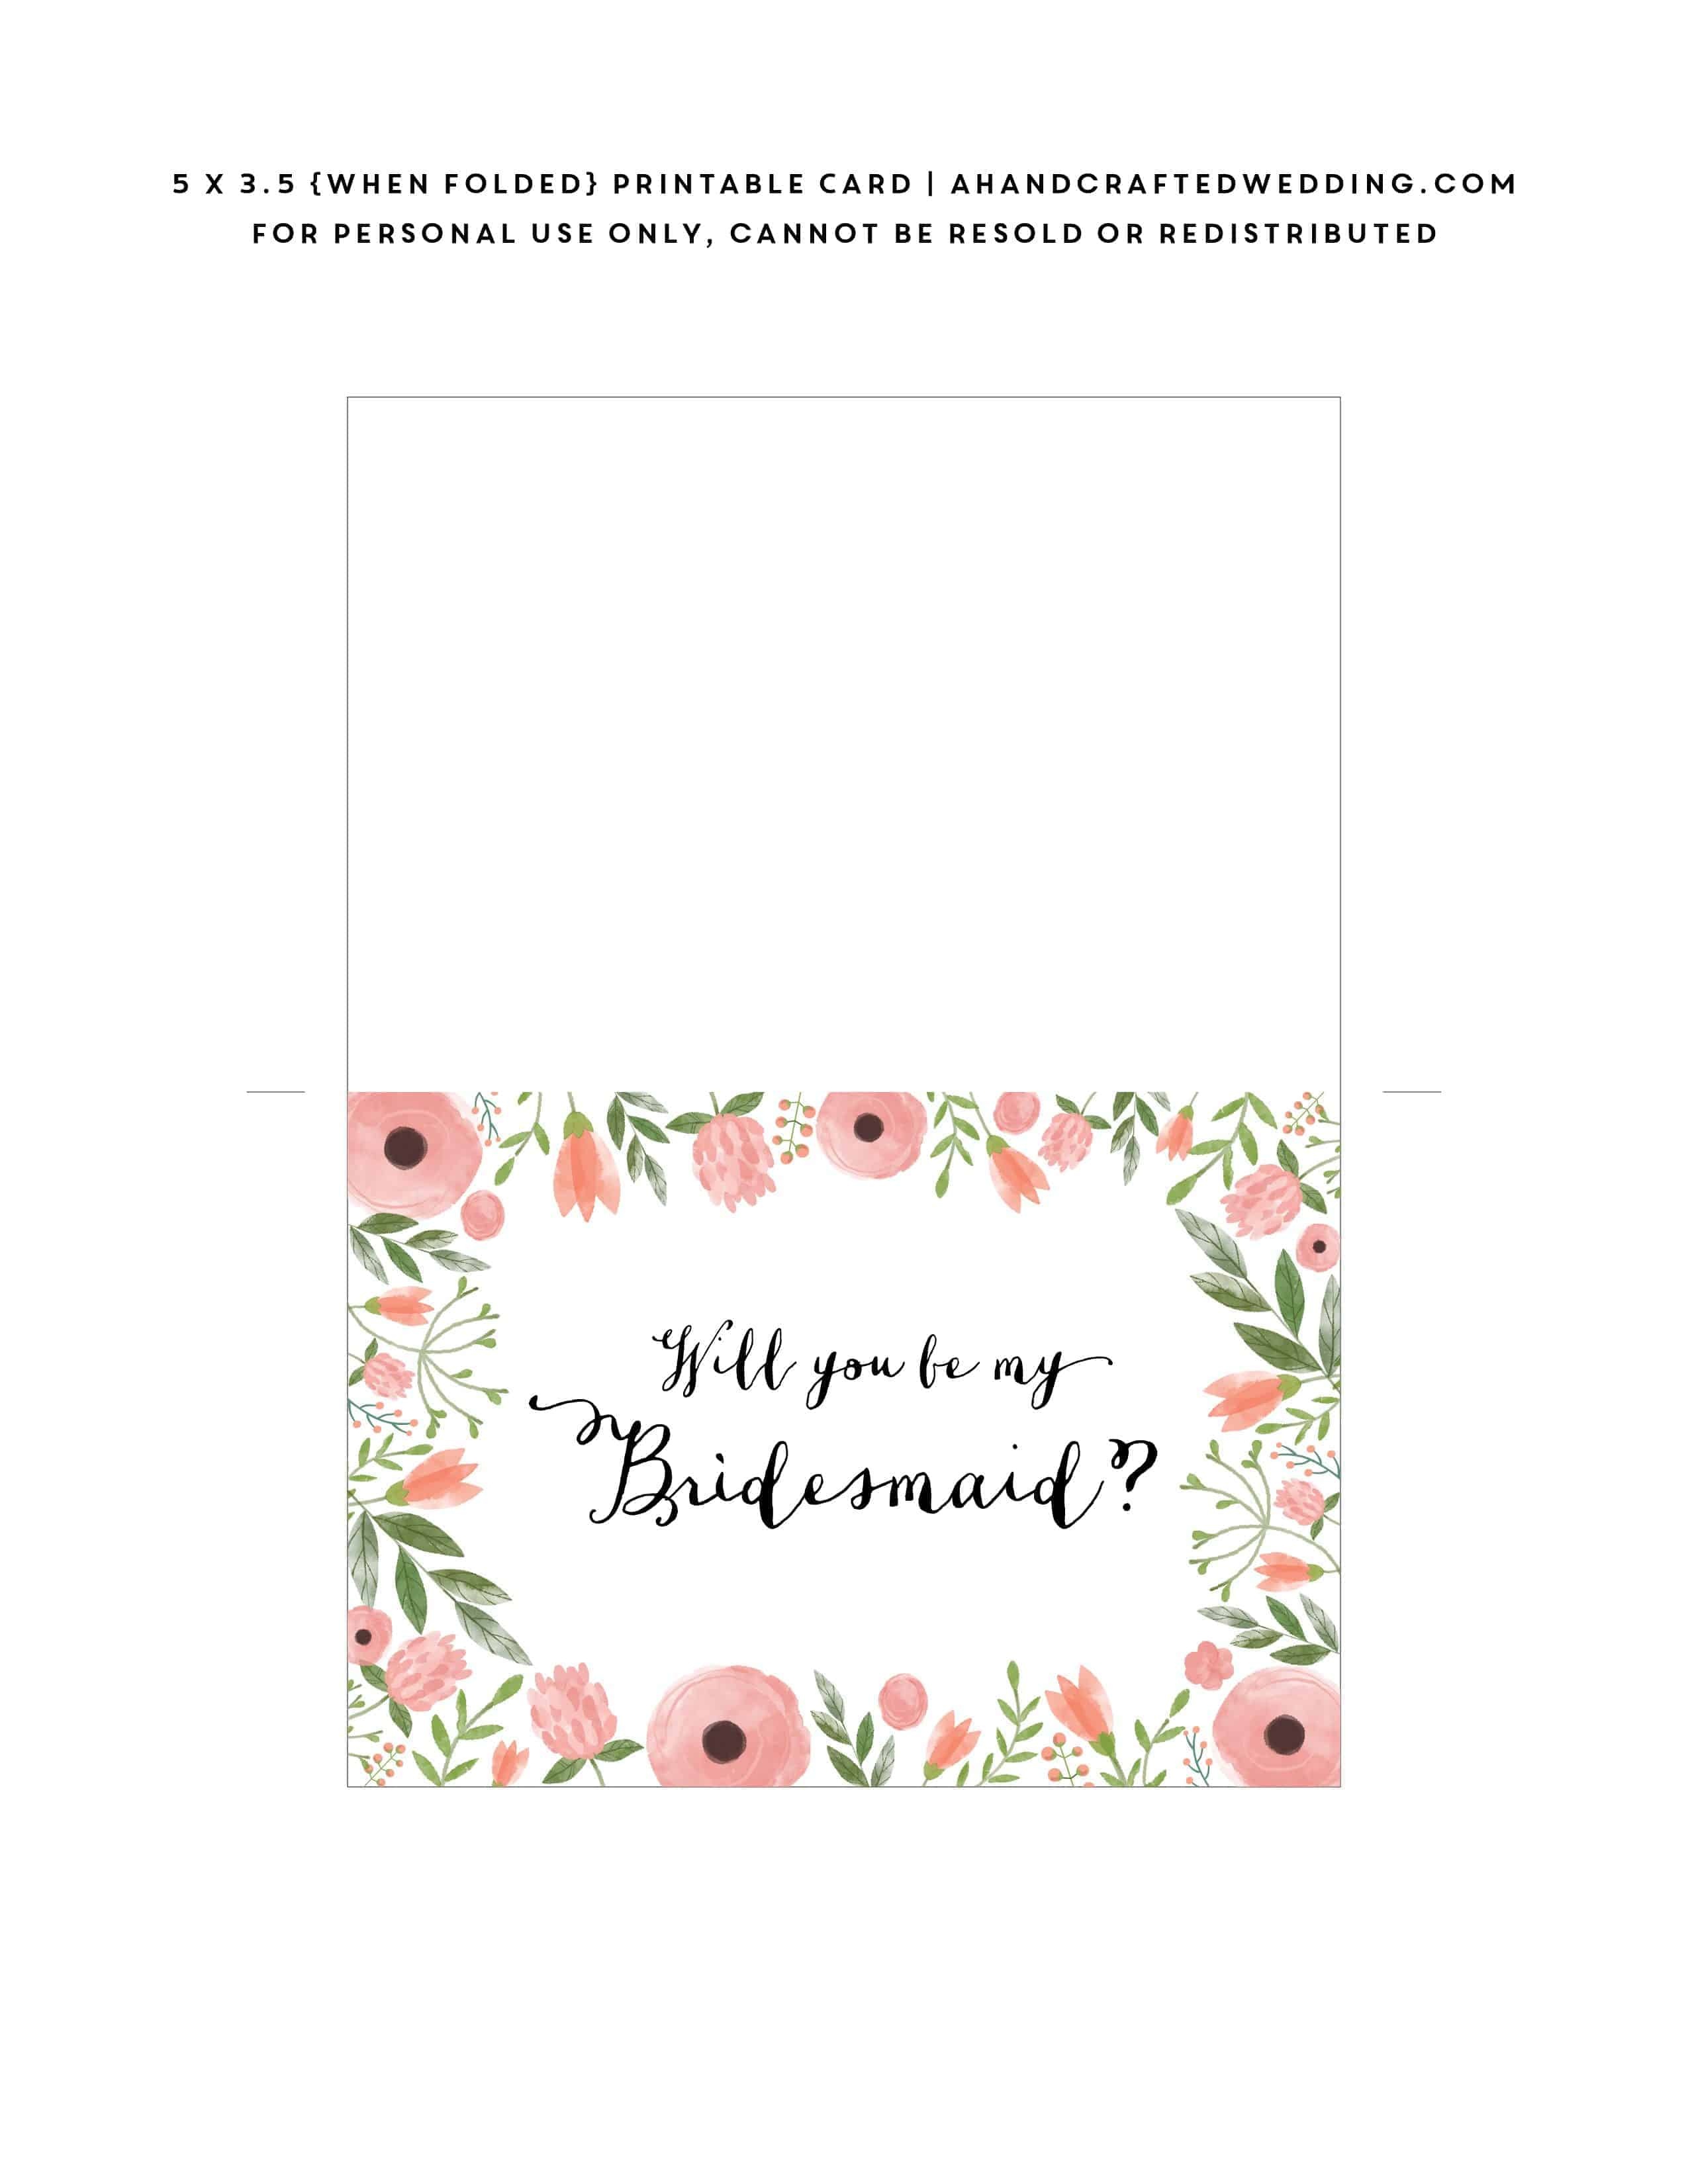 Free Printable Will You Be My Bridesmaid Card | Mountain Modern Life - Will You Be My Bridesmaid Free Printable